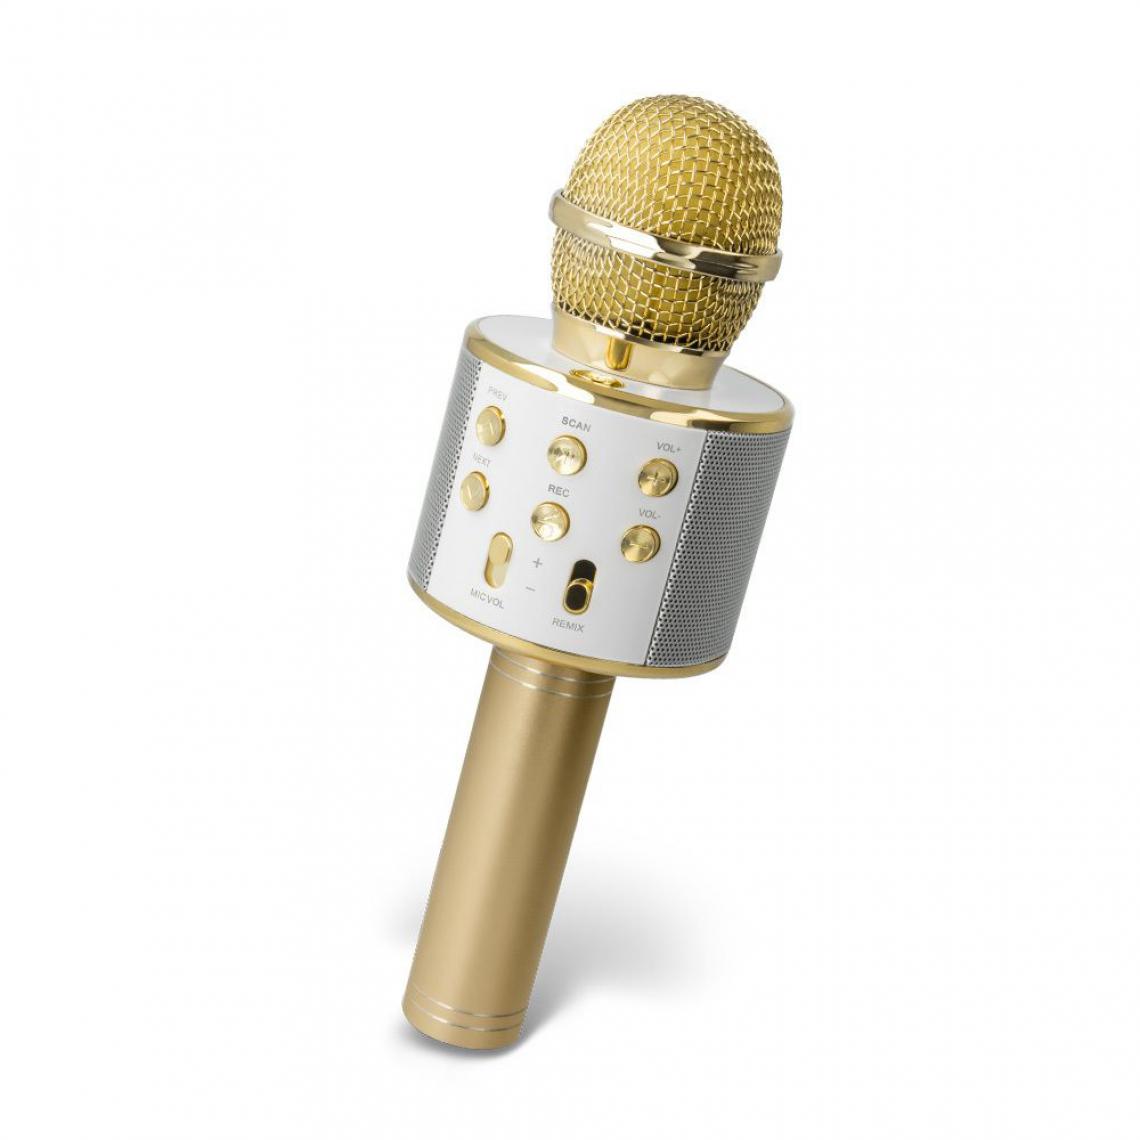 Ozzzo - Microphone Karaoke bluetooth haut parleur ozzzo Gold Or pour Samsung Galaxy A8s - Autres accessoires smartphone